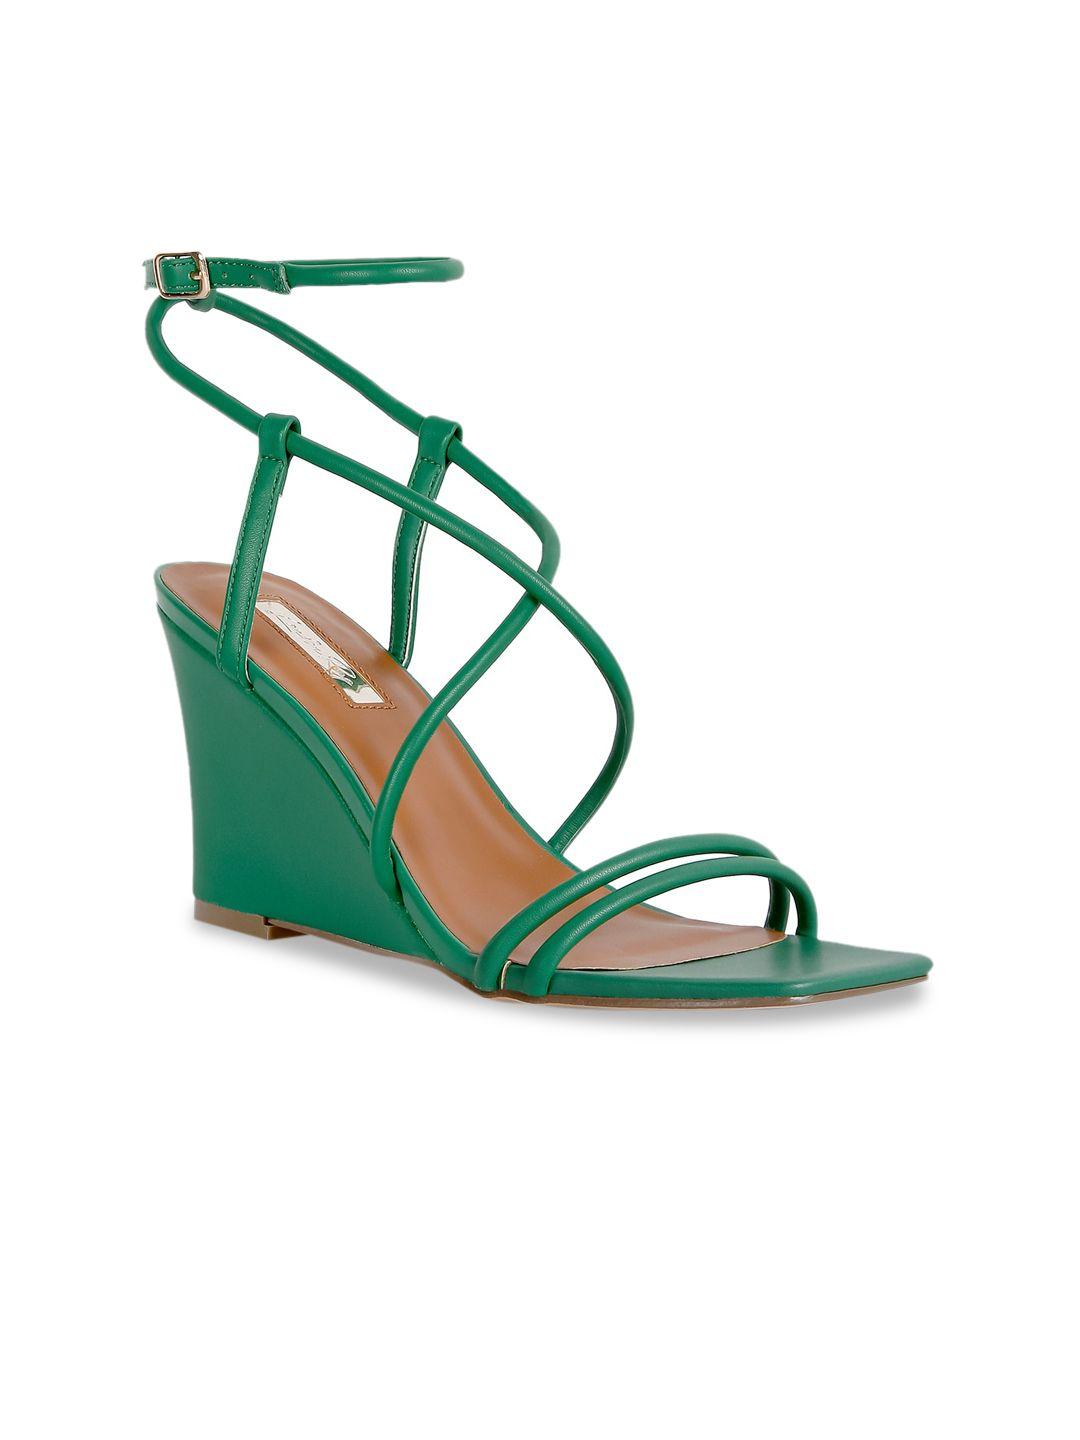 london rag green ankle strap wedge heels